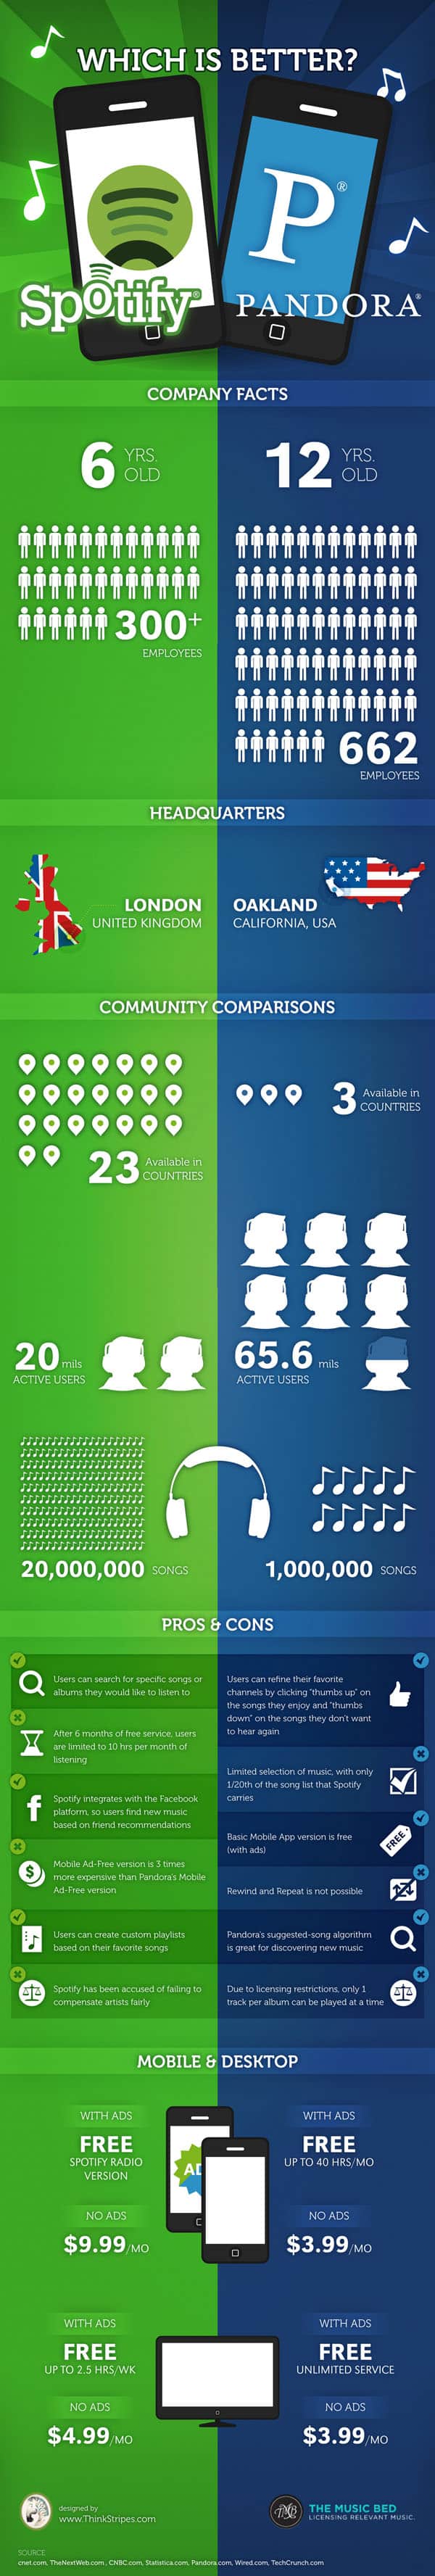 Spotify vs. Pandora Infographic